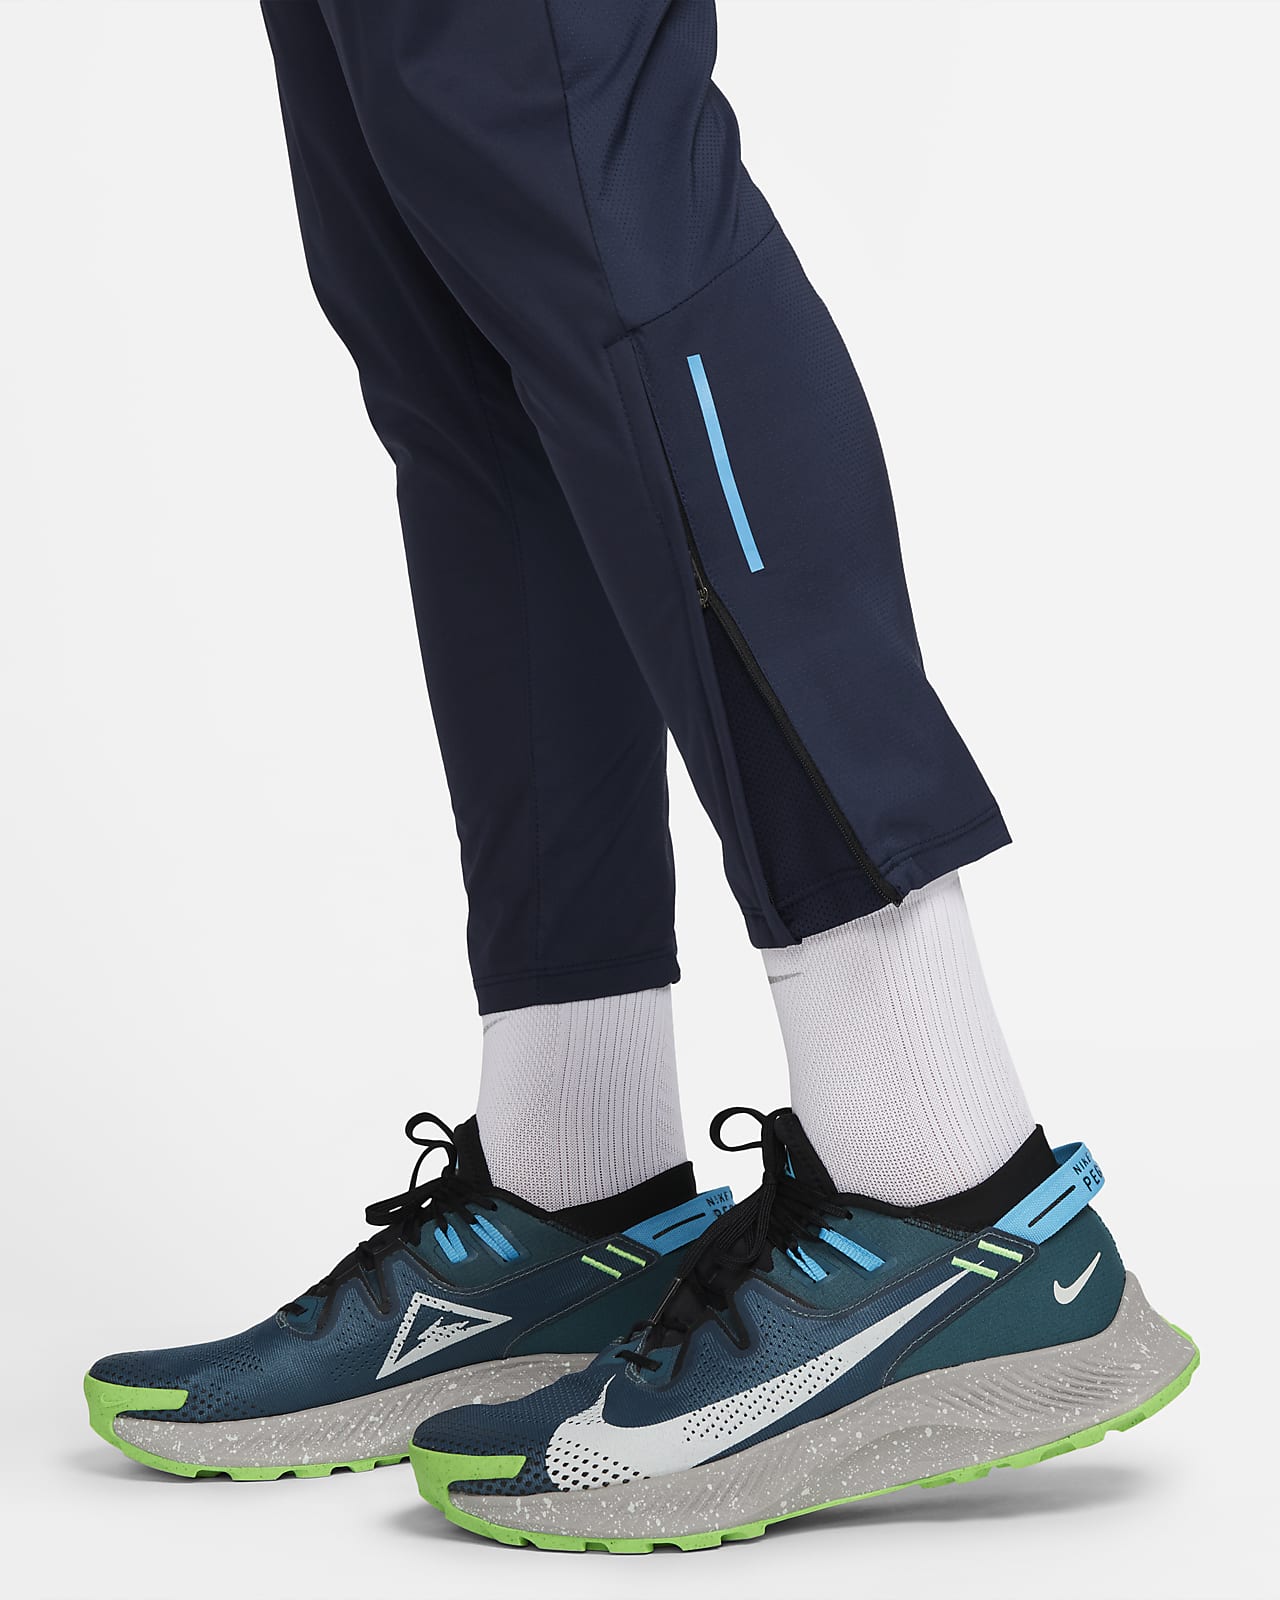 Nike Dri-FIT Phenom Elite Men's Running Pants - Obsidian